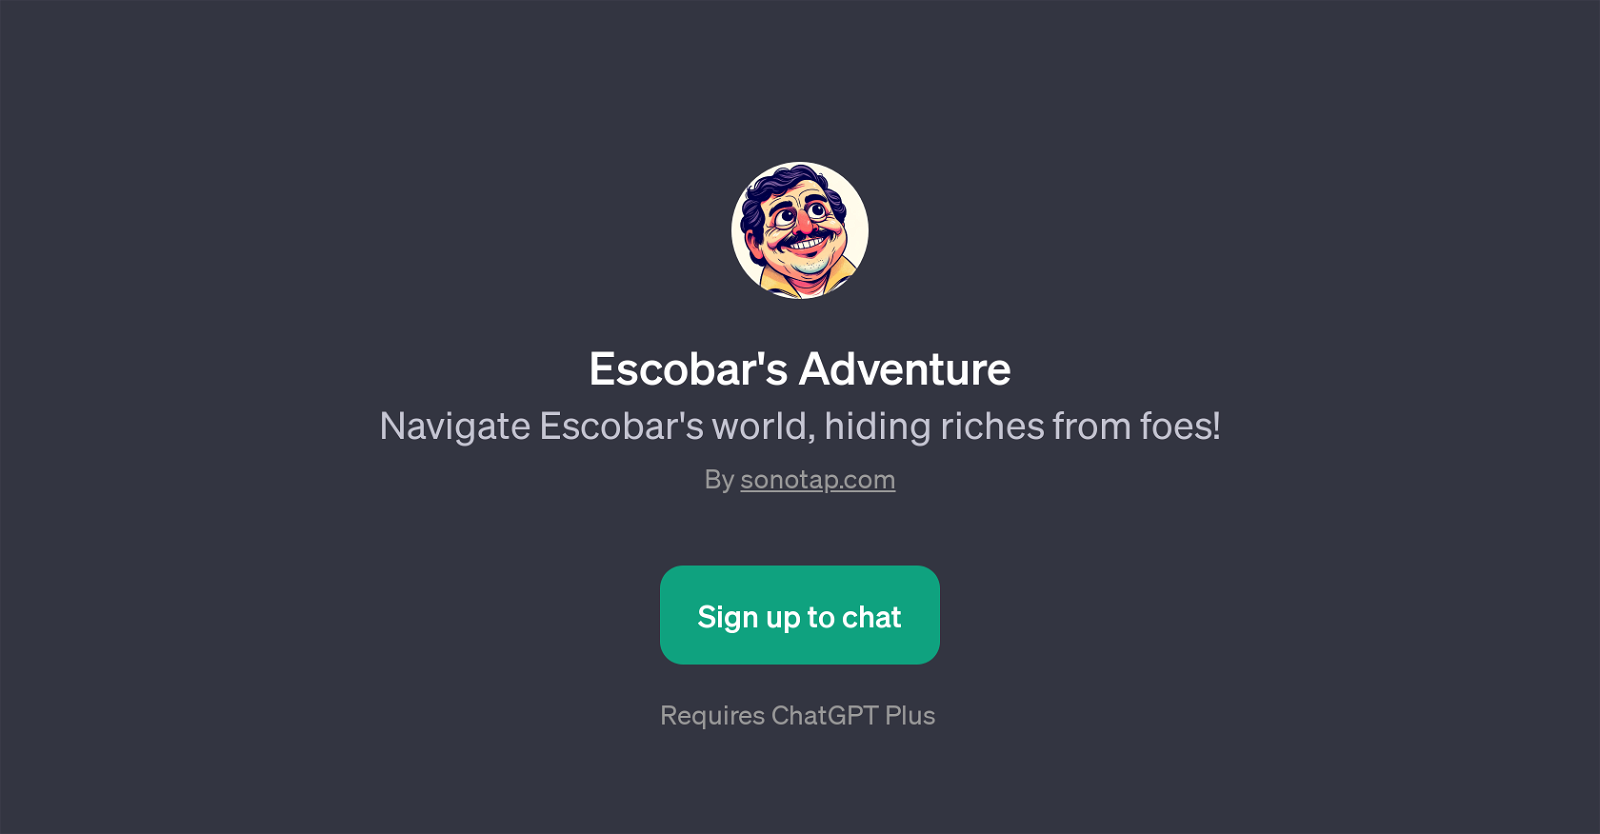 Escobar's Adventure website